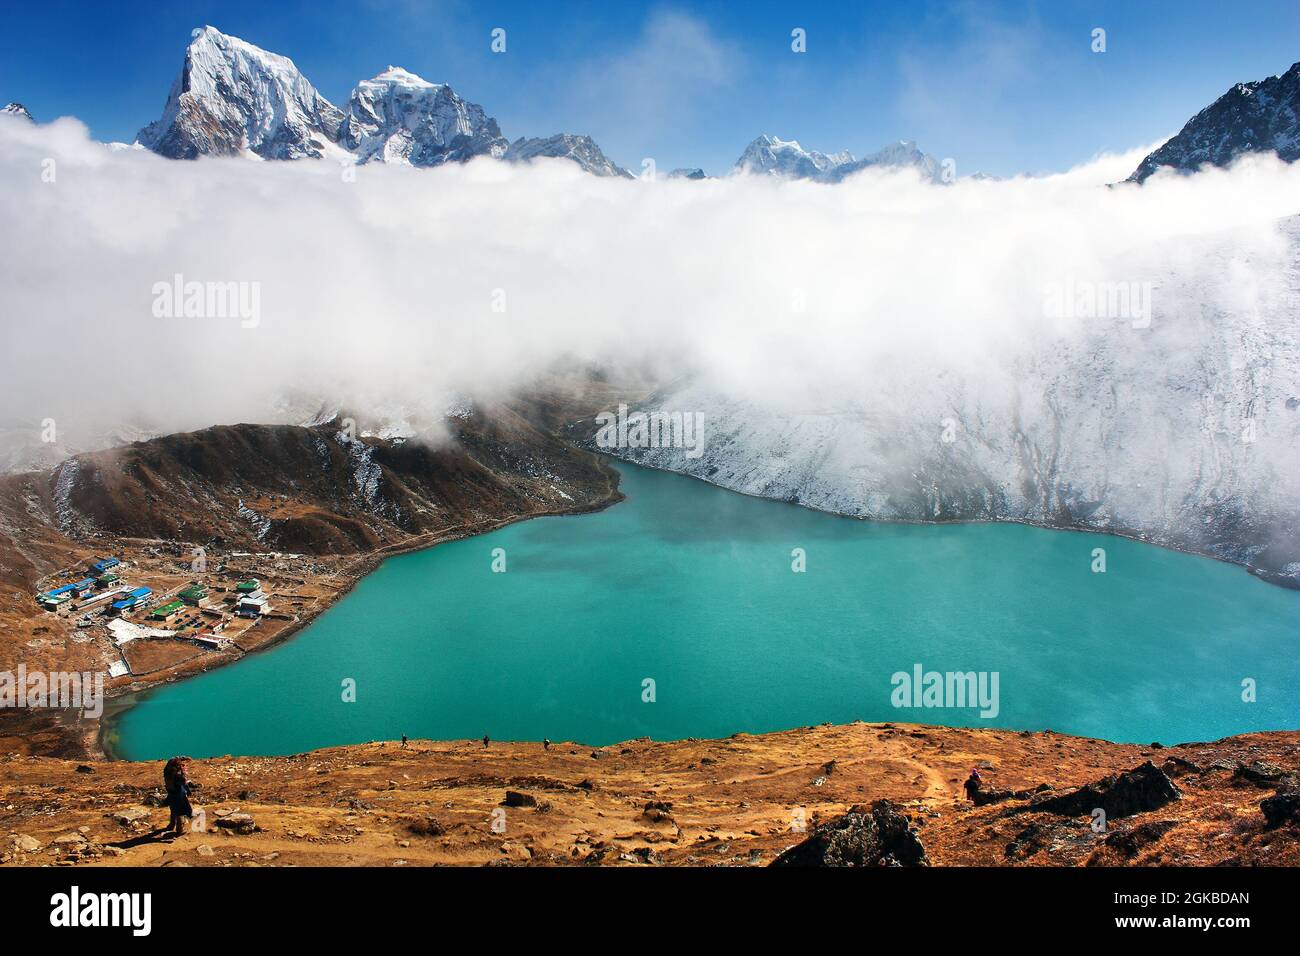 dudh pokhari lake, gokyo, Arakam tse peak and chola tse peak - nepal Stock Photo